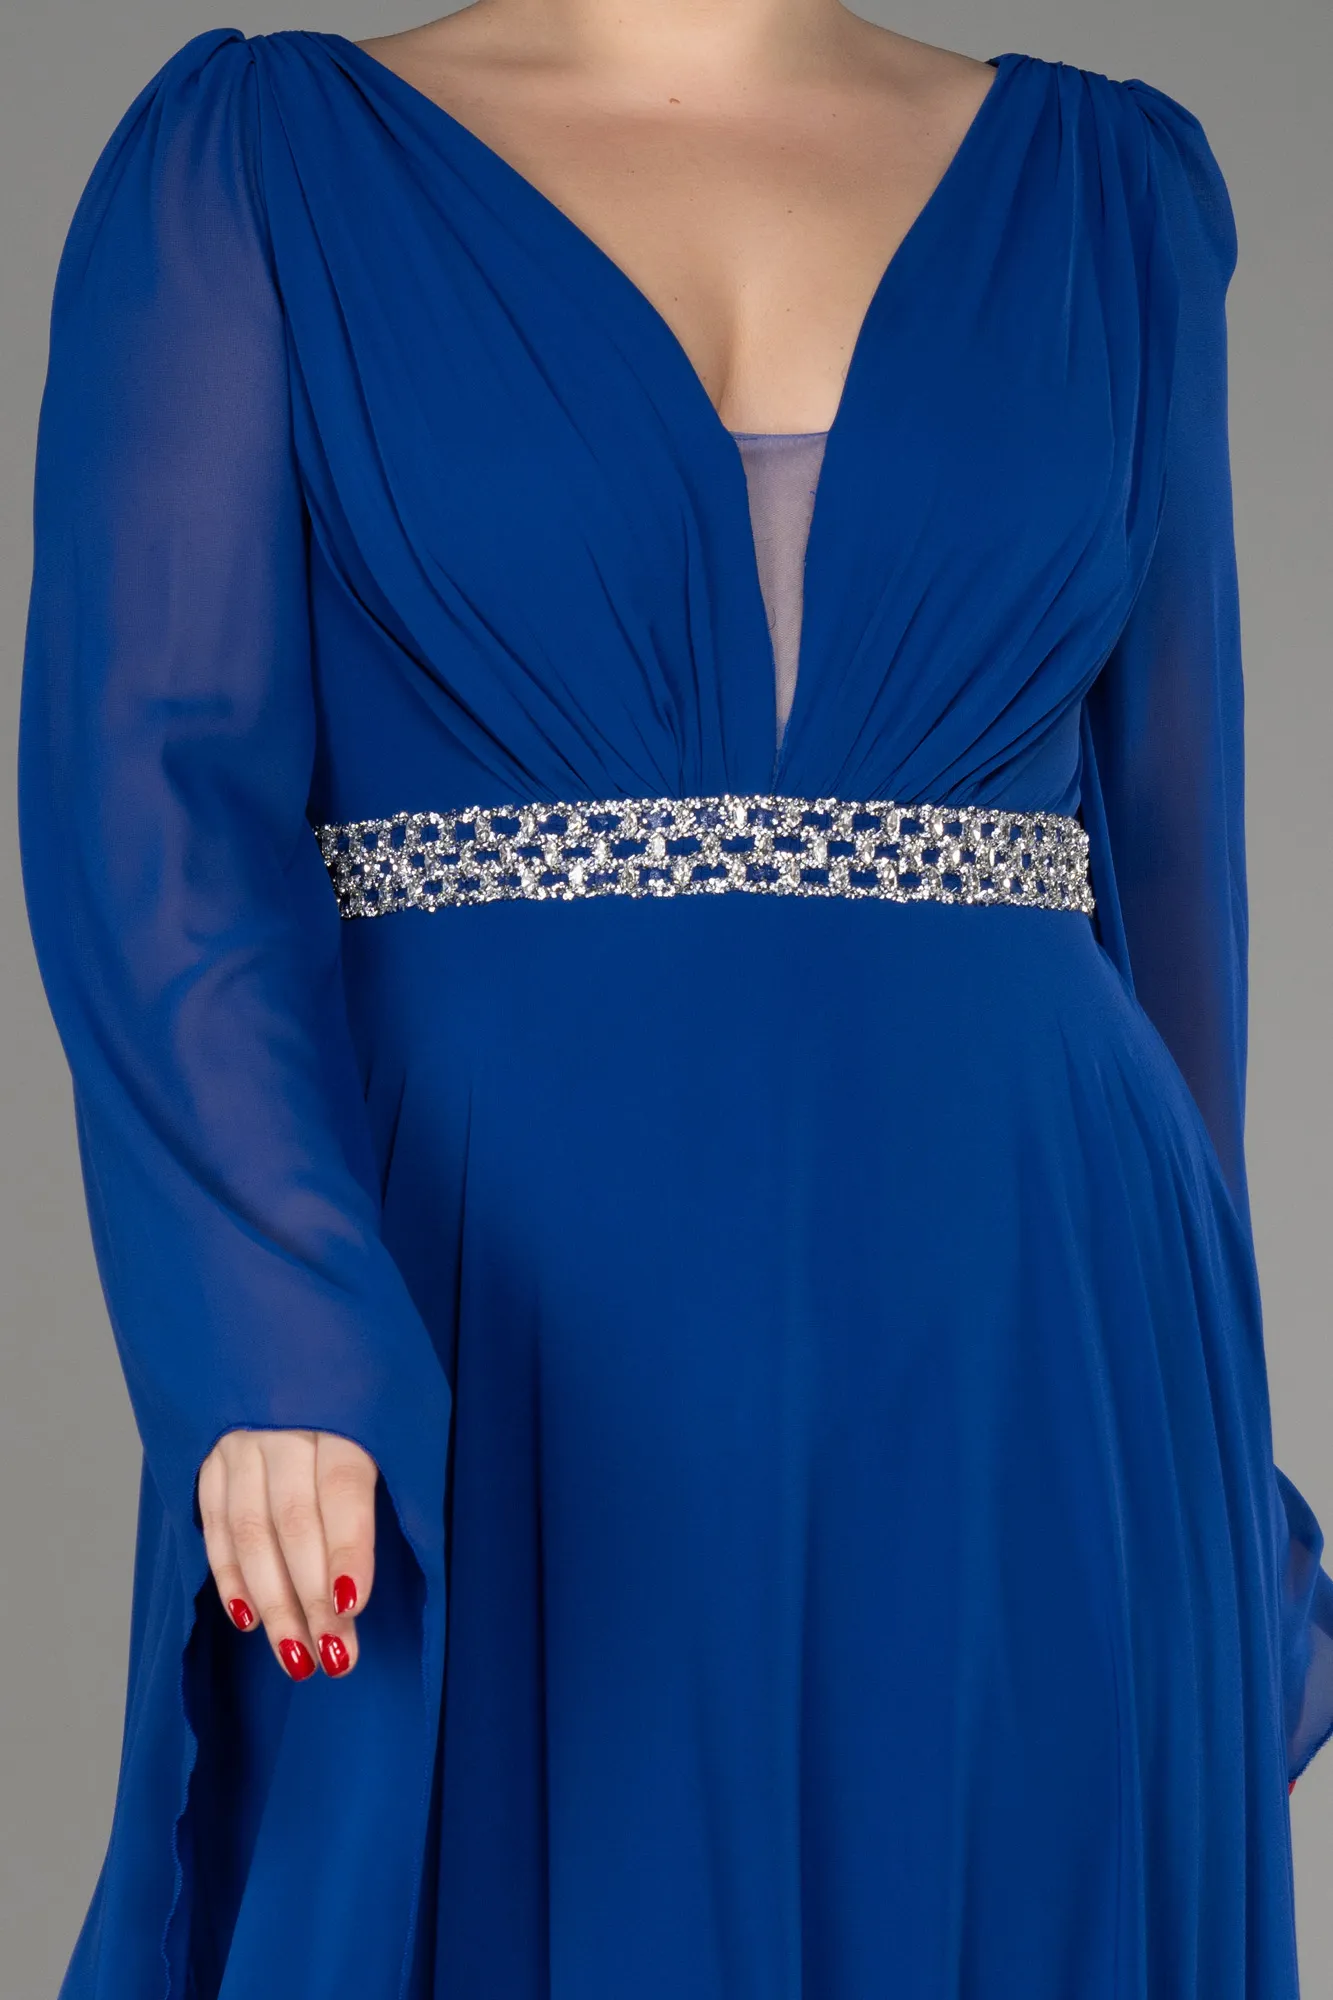 Sax Blue-Long Chiffon Plus Size Evening Dress ABU3543